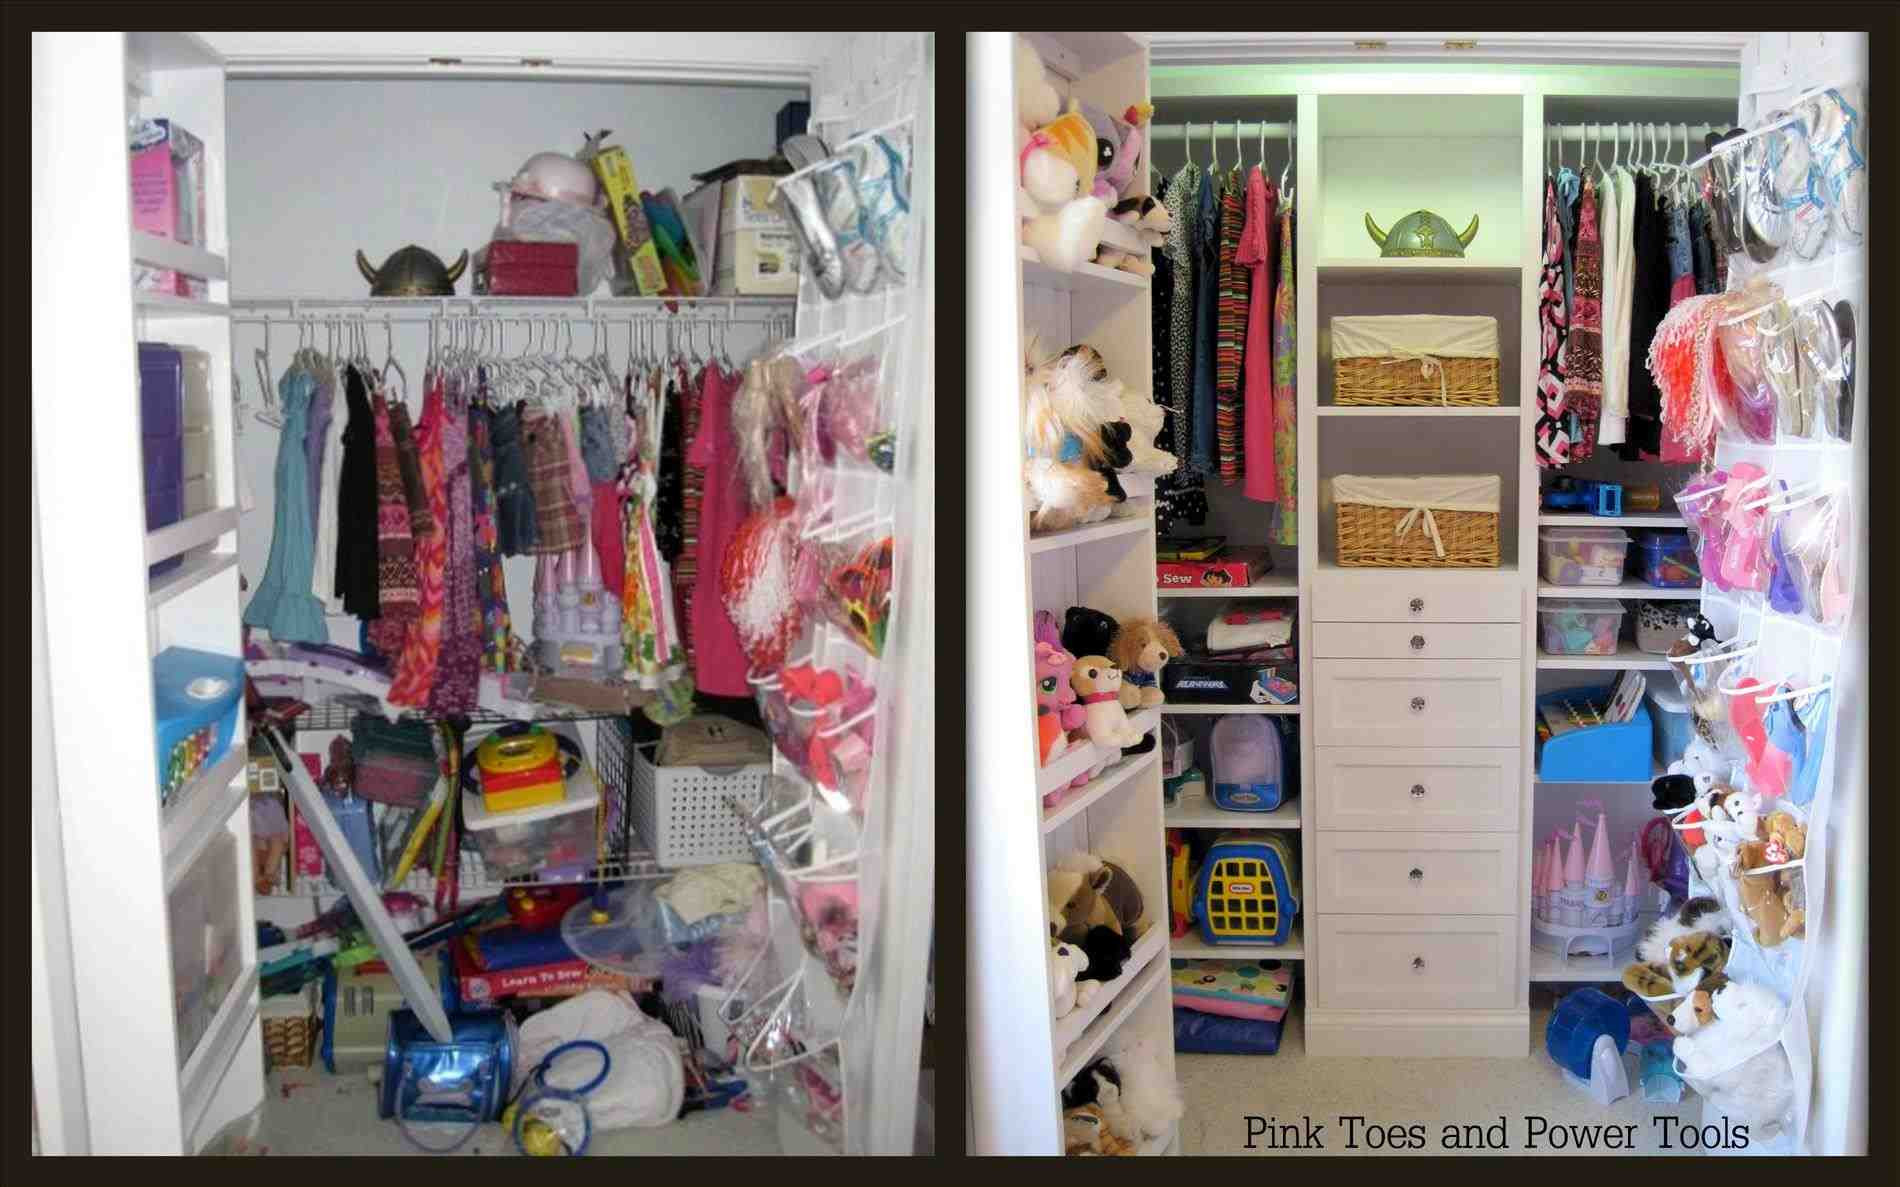 Best ideas about DIY Closet Organization Ideas On A Budget
. Save or Pin Diy Closet Organization Ideas A Bud Now.